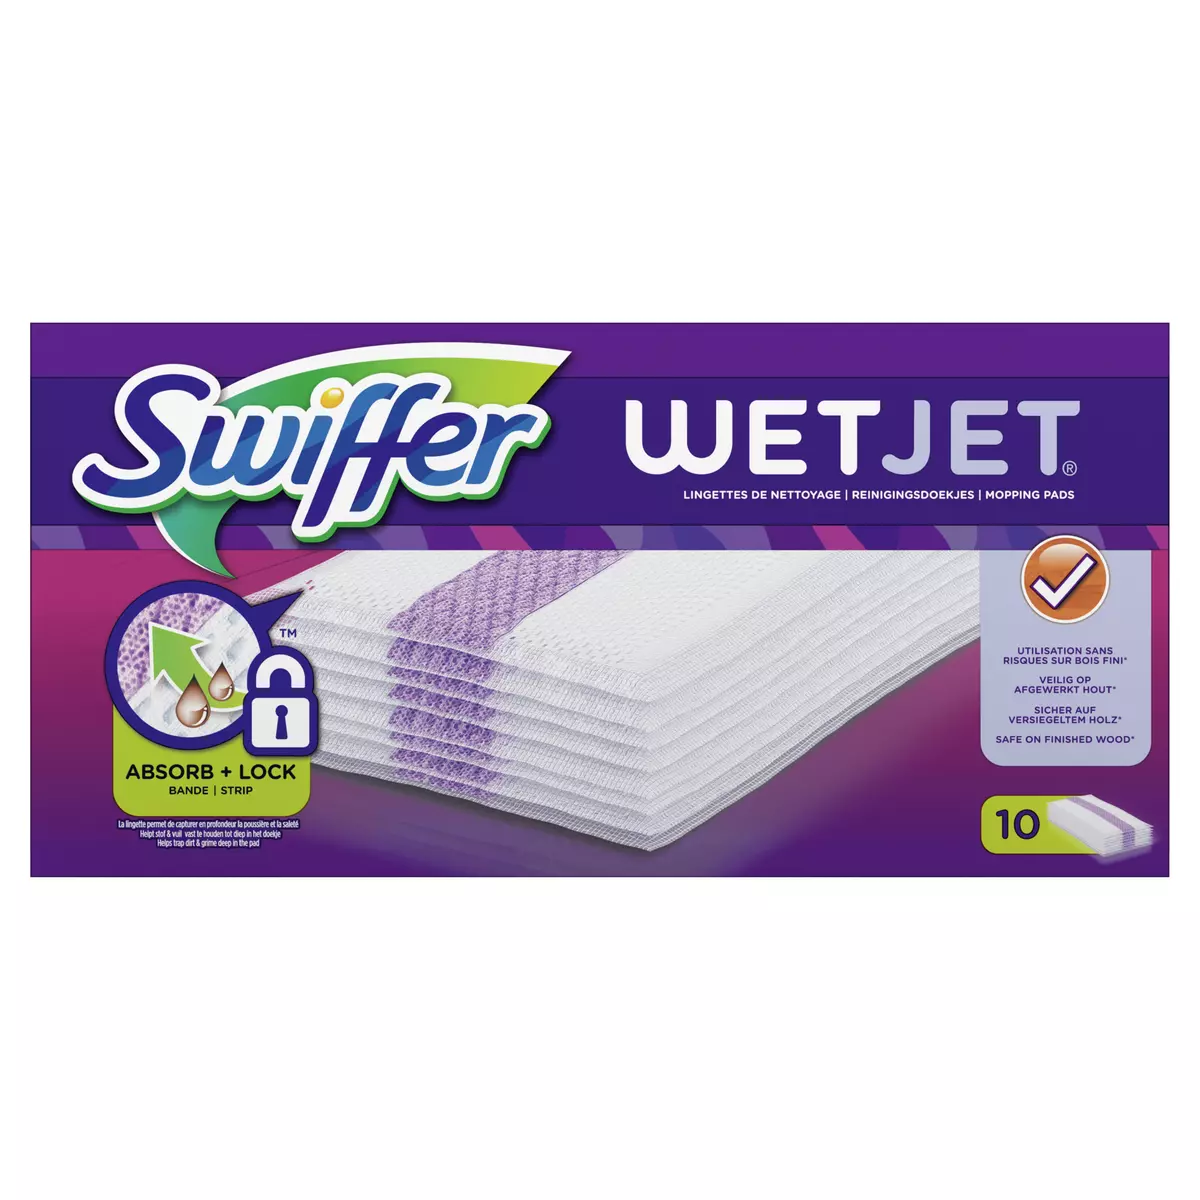 Swiffer WetJet Solution Nettoyante Pour Balai Spray, ( 2 x 1,25 L)